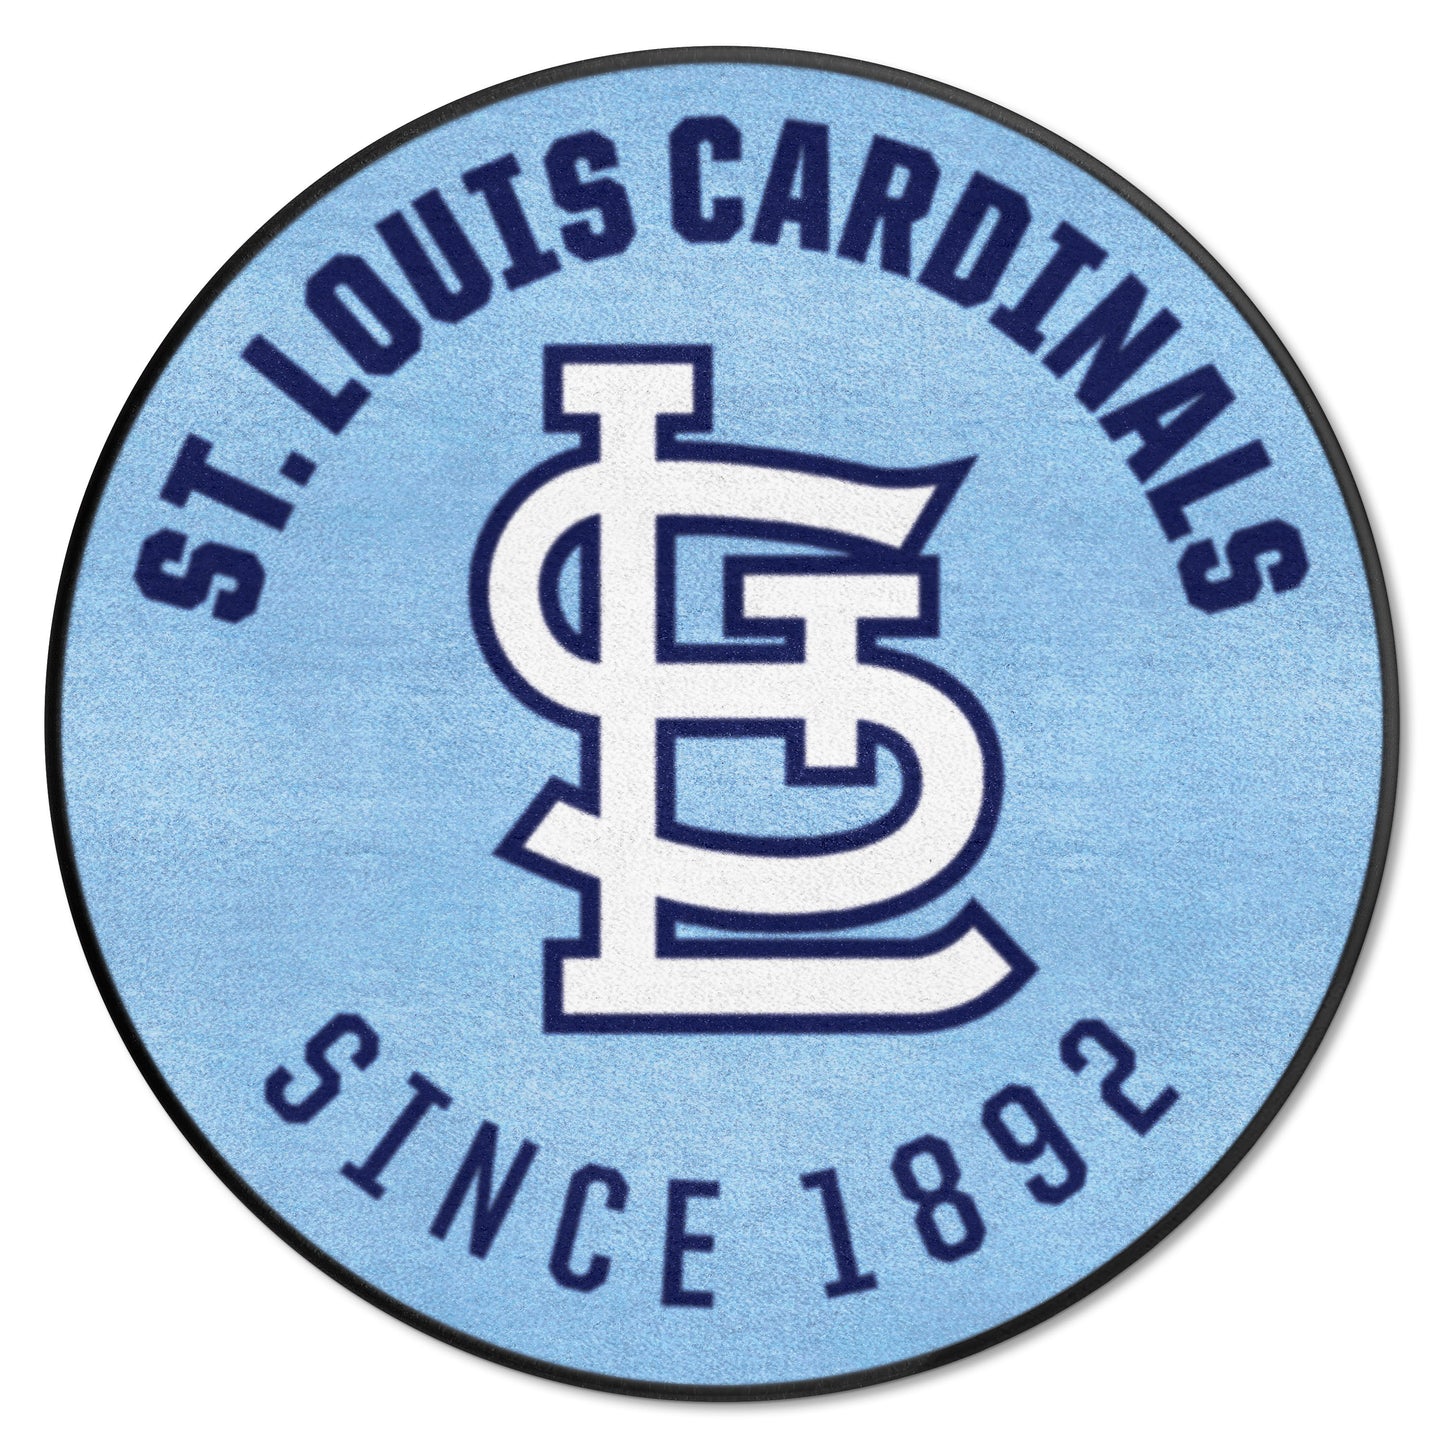 St. Louis Cardinals Roundel Rug - 27in. Diameter - Retro Collection, 1976 St. Louis Cardinals